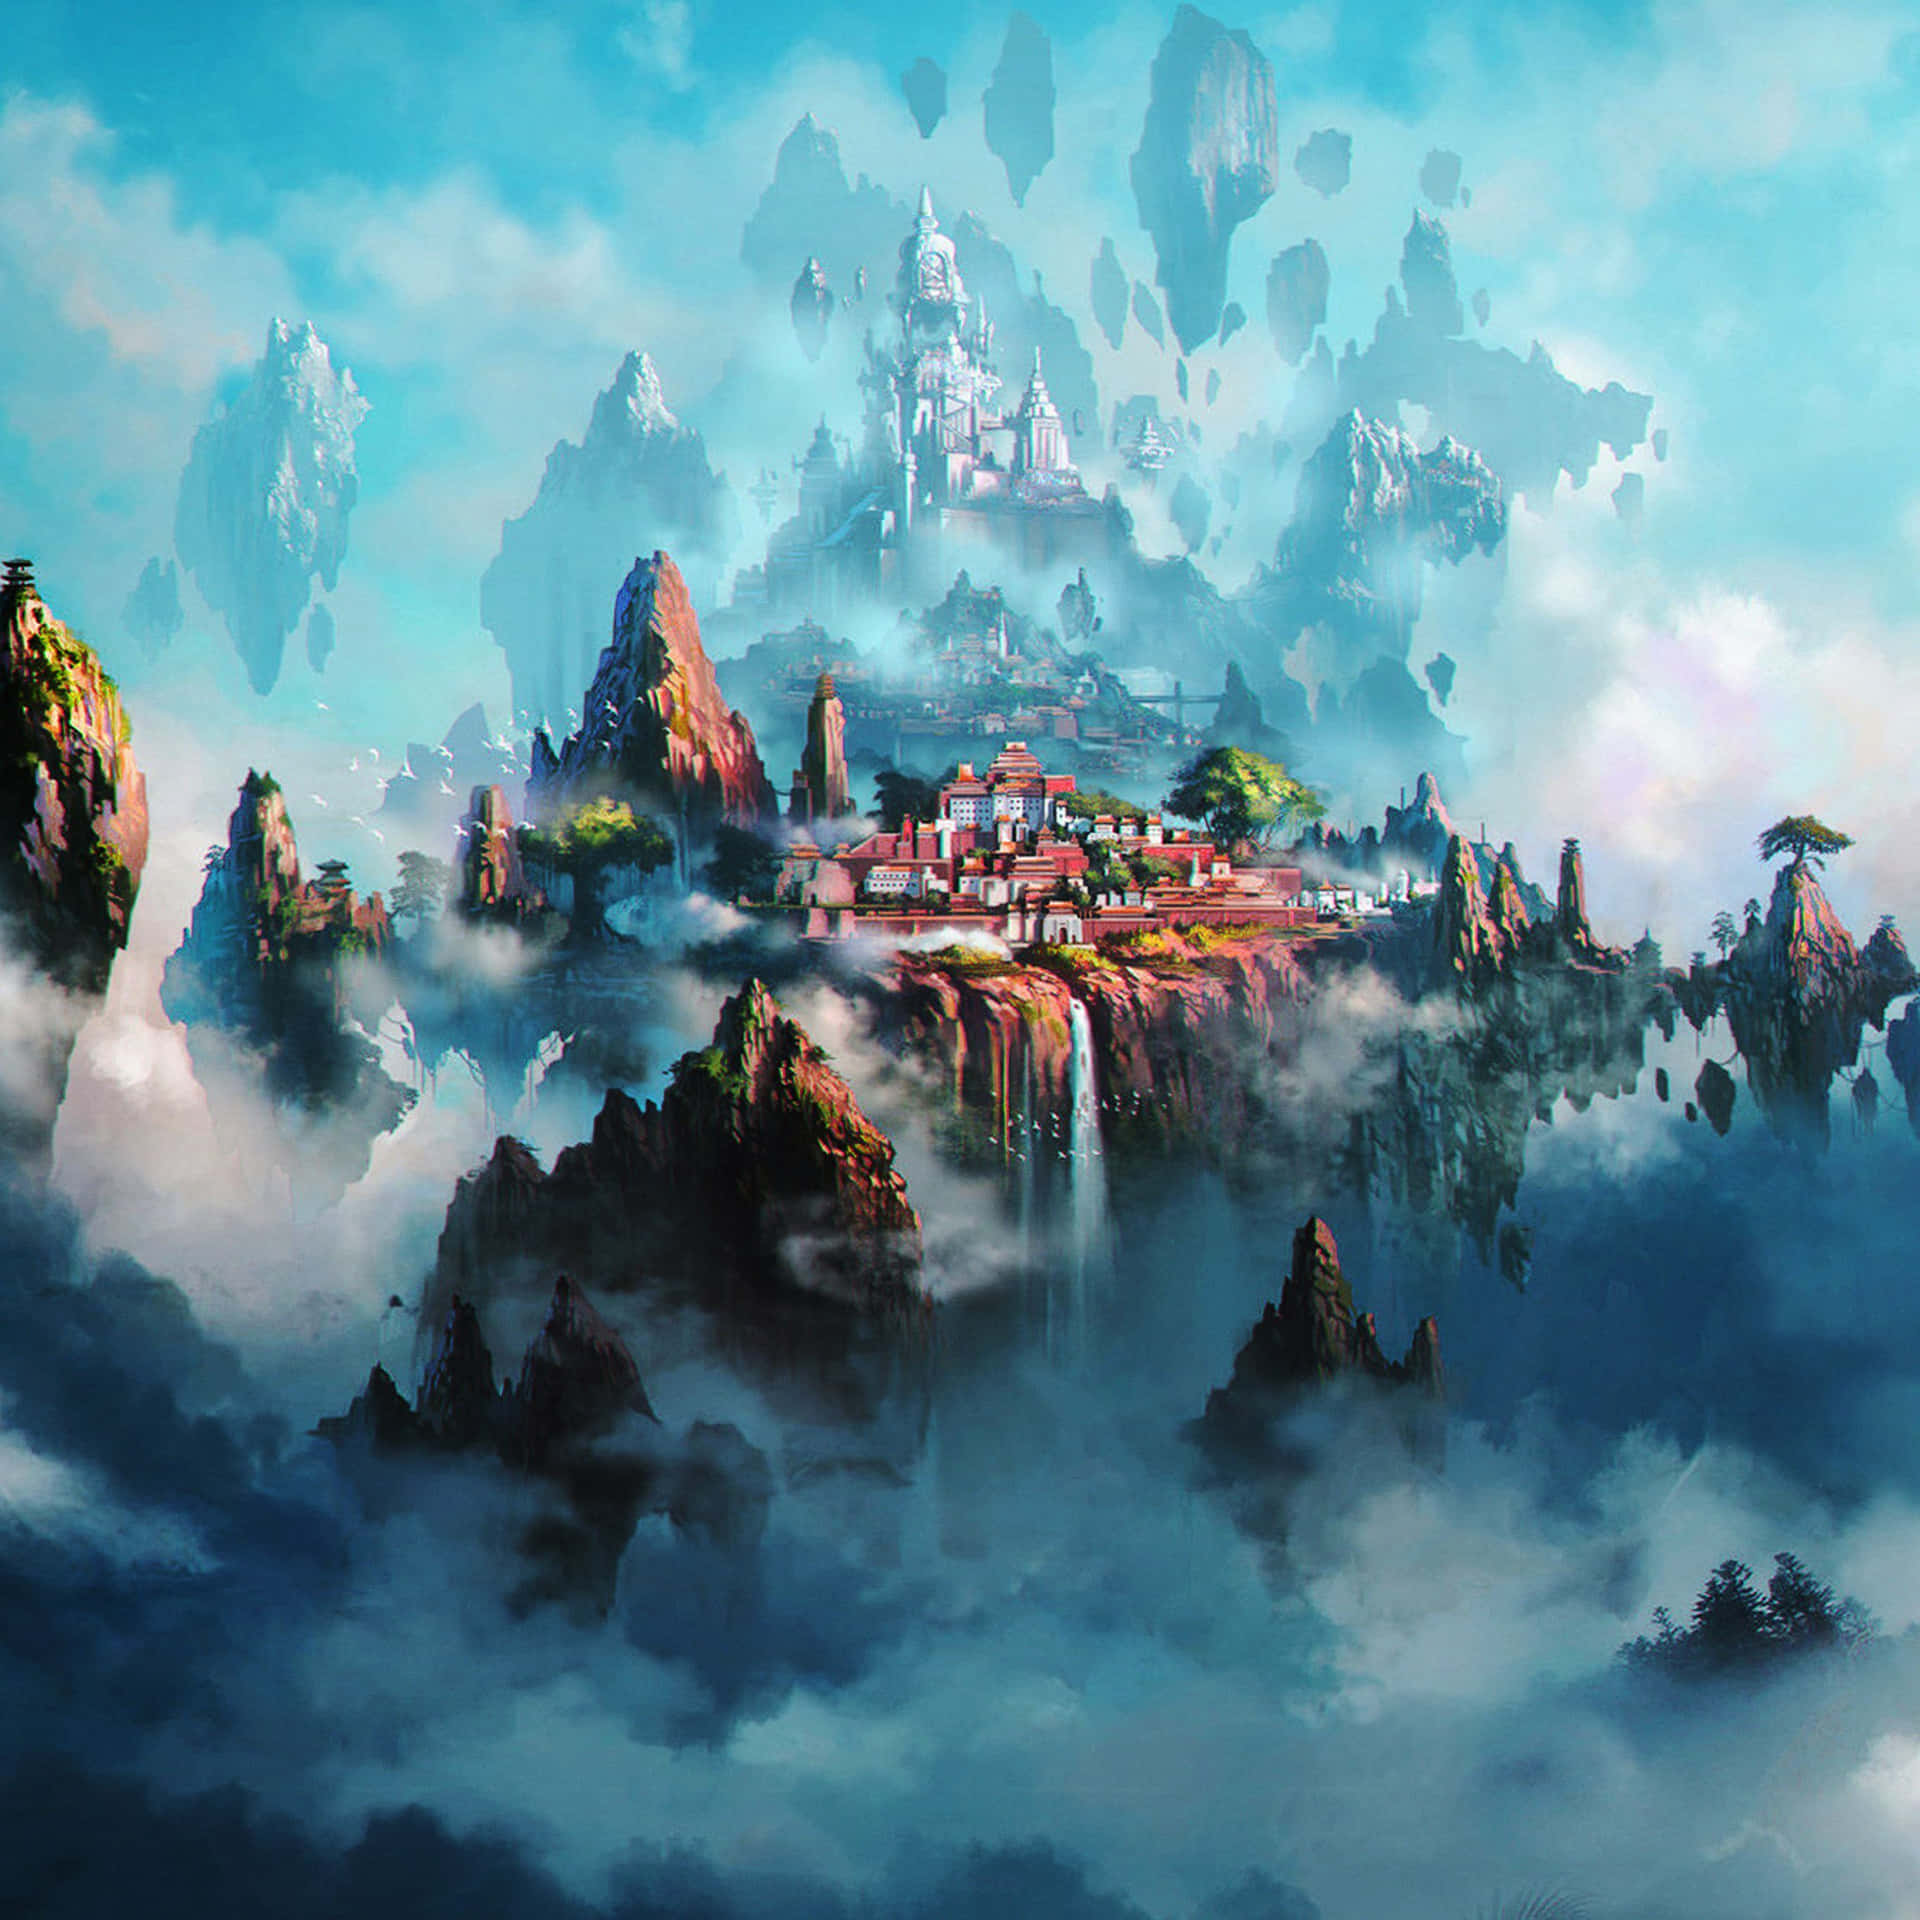 Cool Ipad Pro Fantasy Castle On Mountain Wallpaper